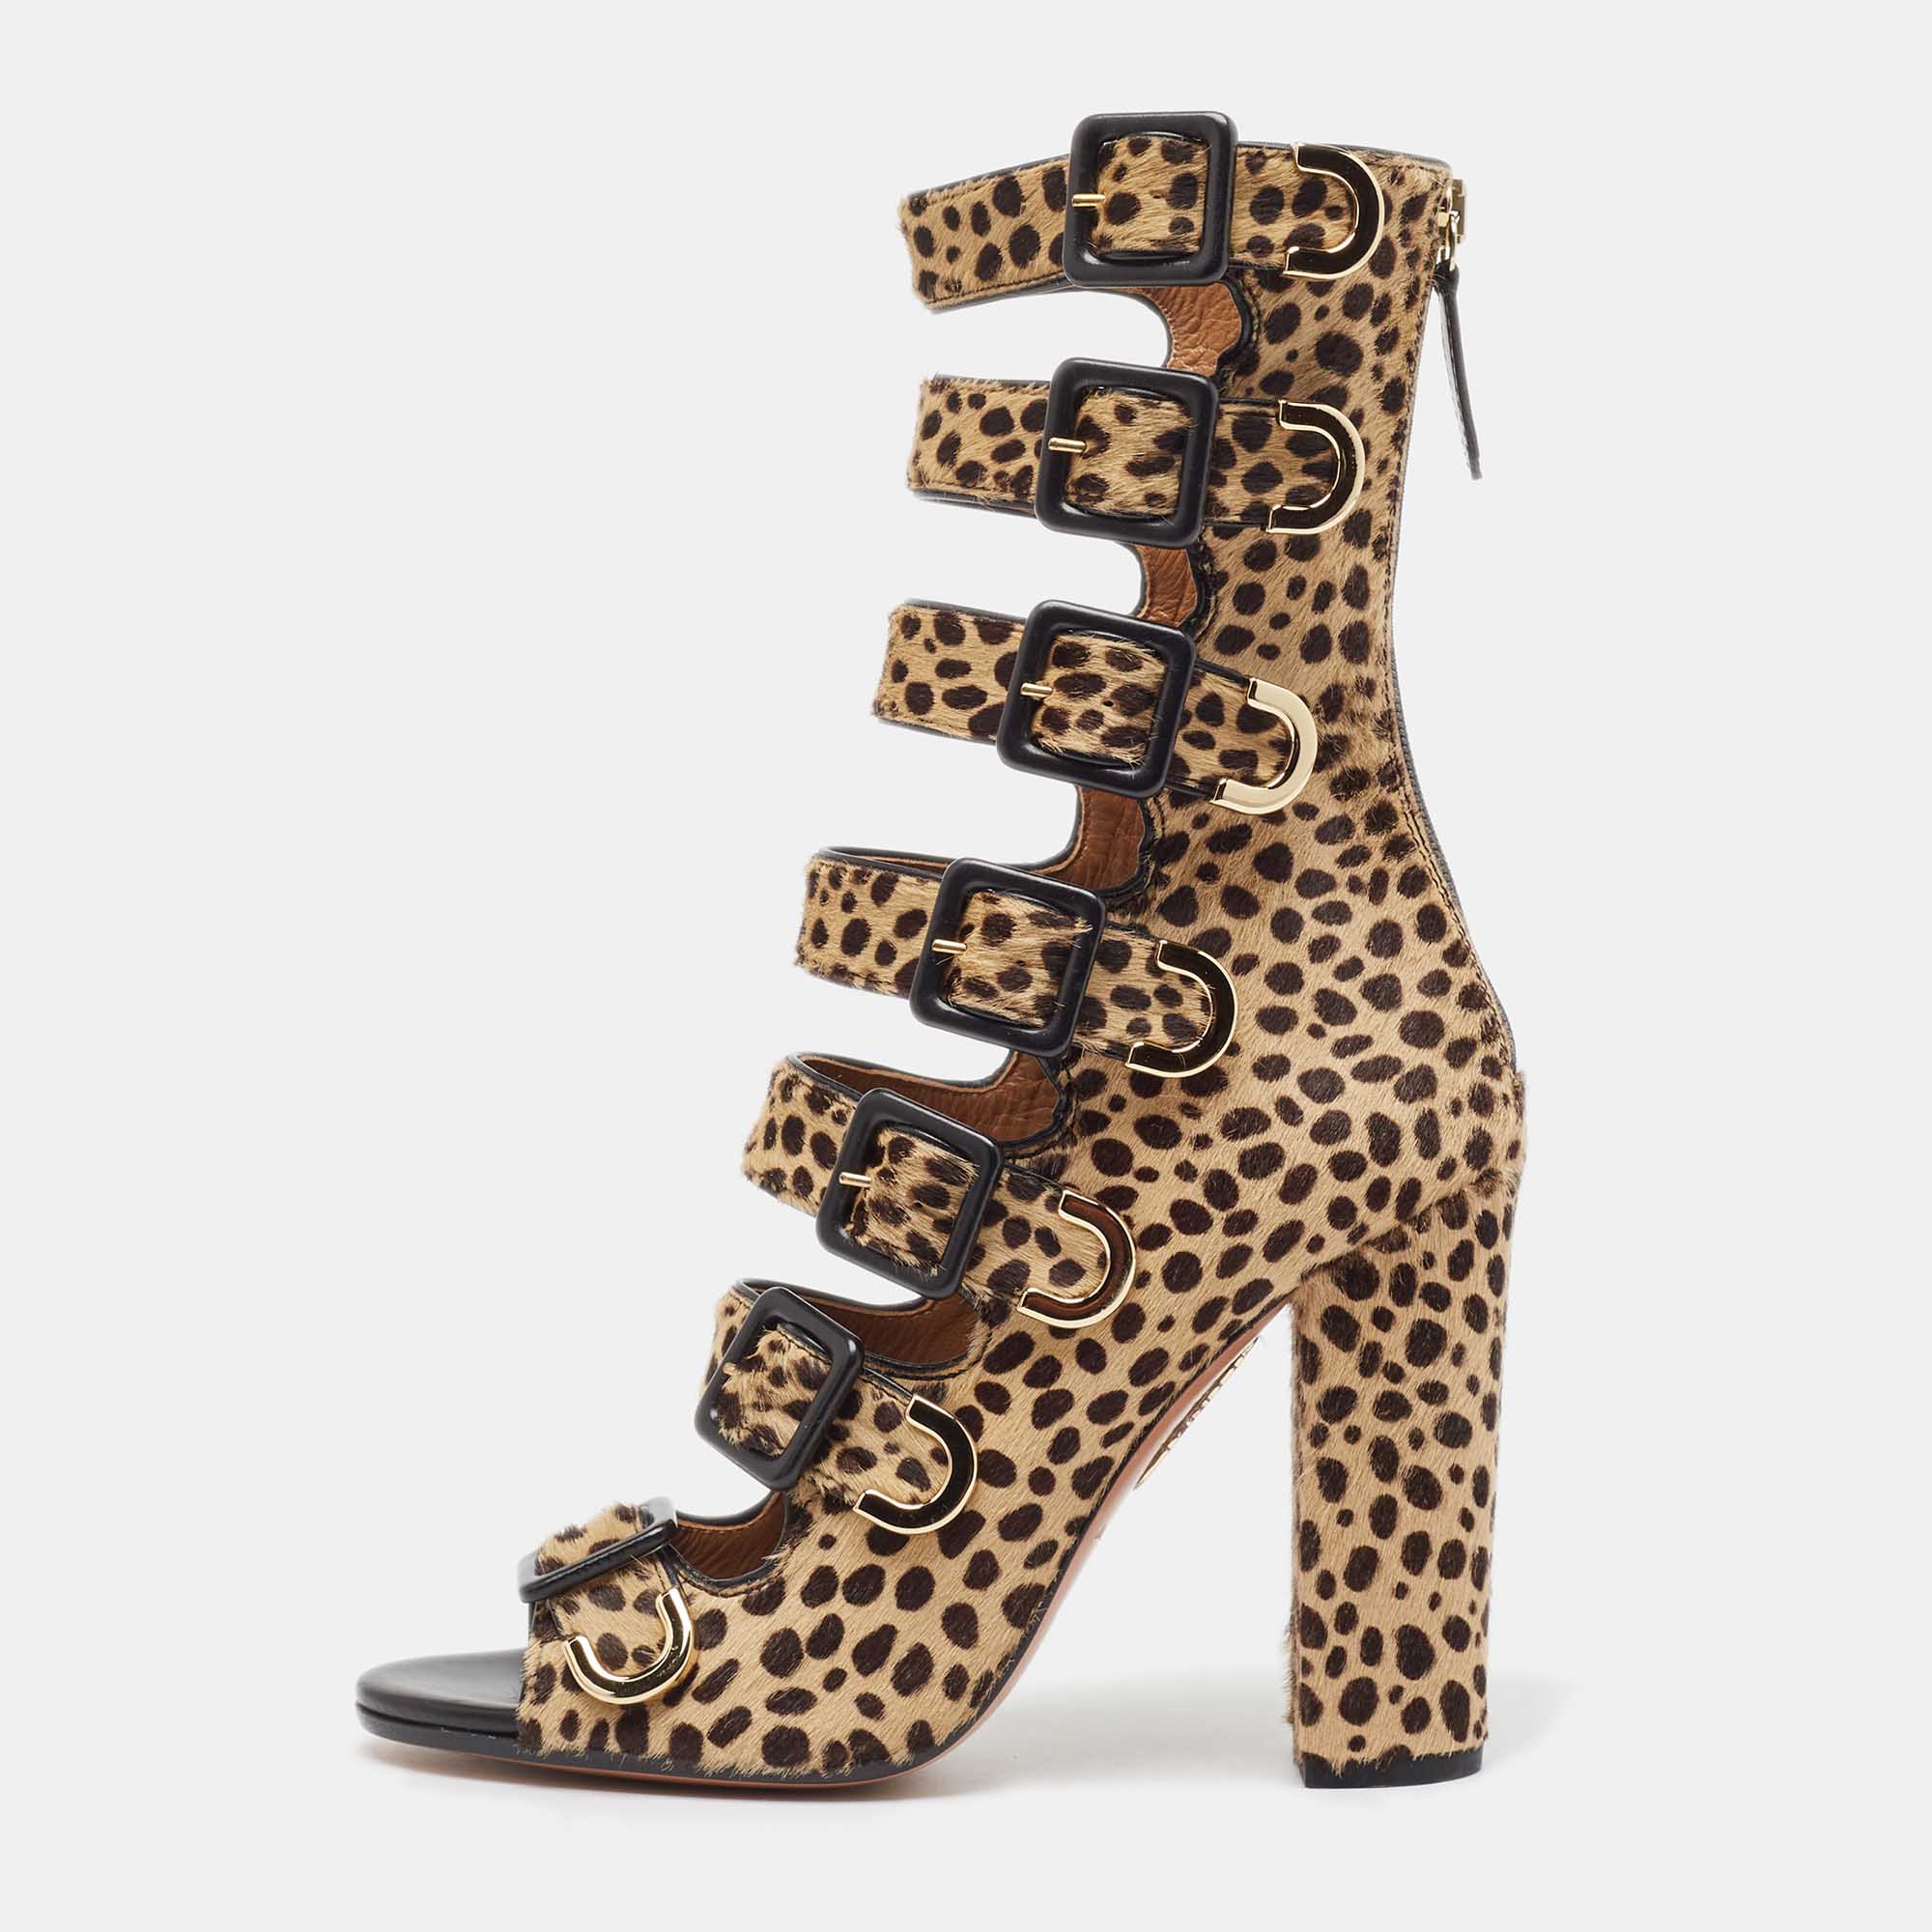 Aquazzura brown/beige calf hair leopard print gladiator sandals size 37